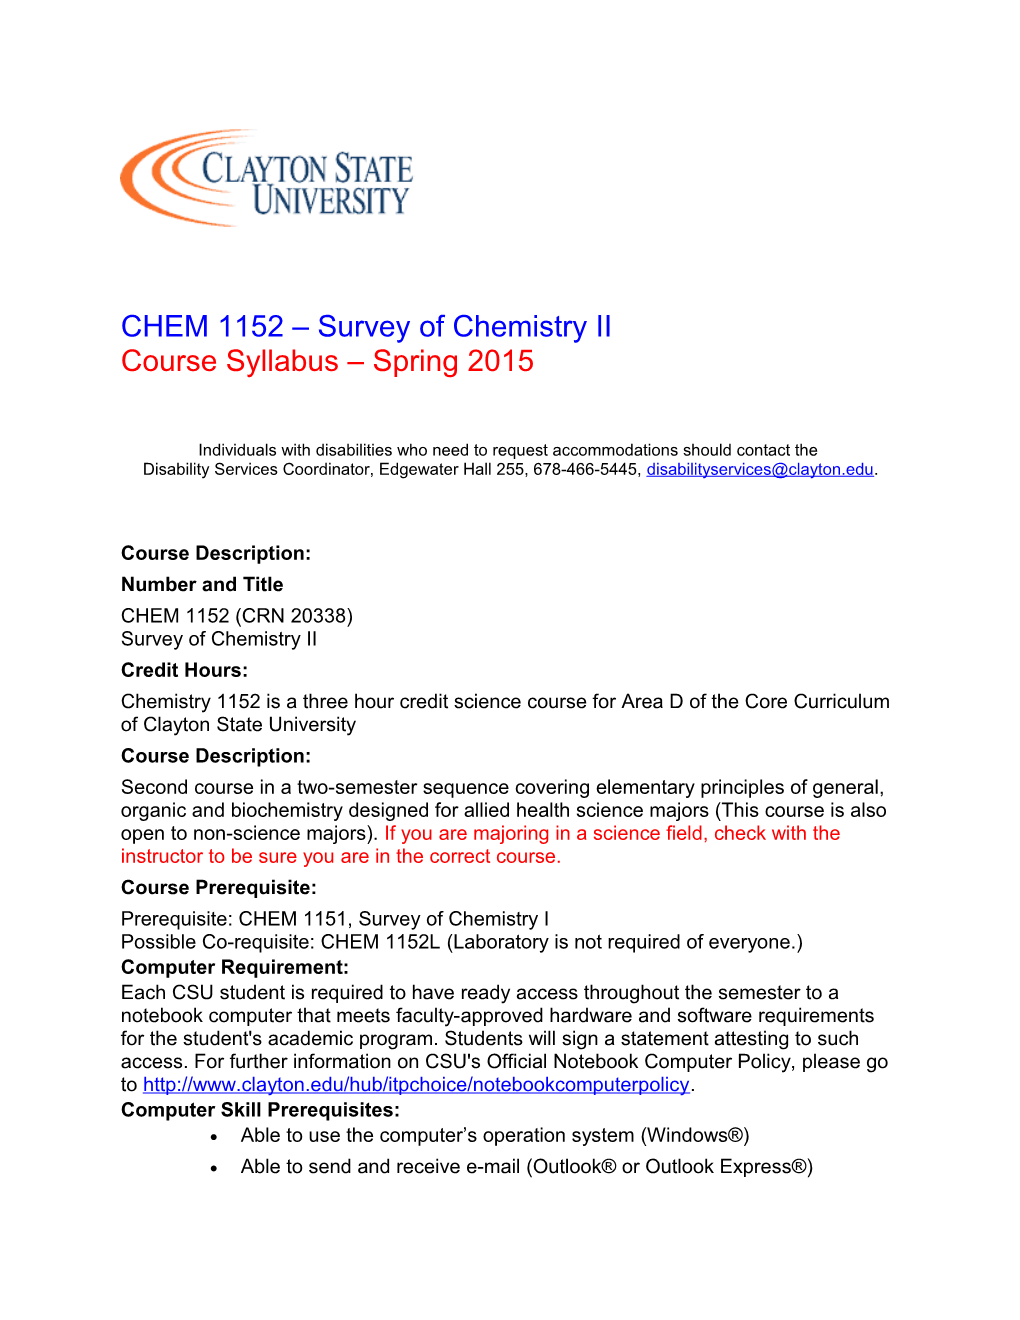 CHEM 1152 Survey of Chemistry II Course Syllabus Spring 2015